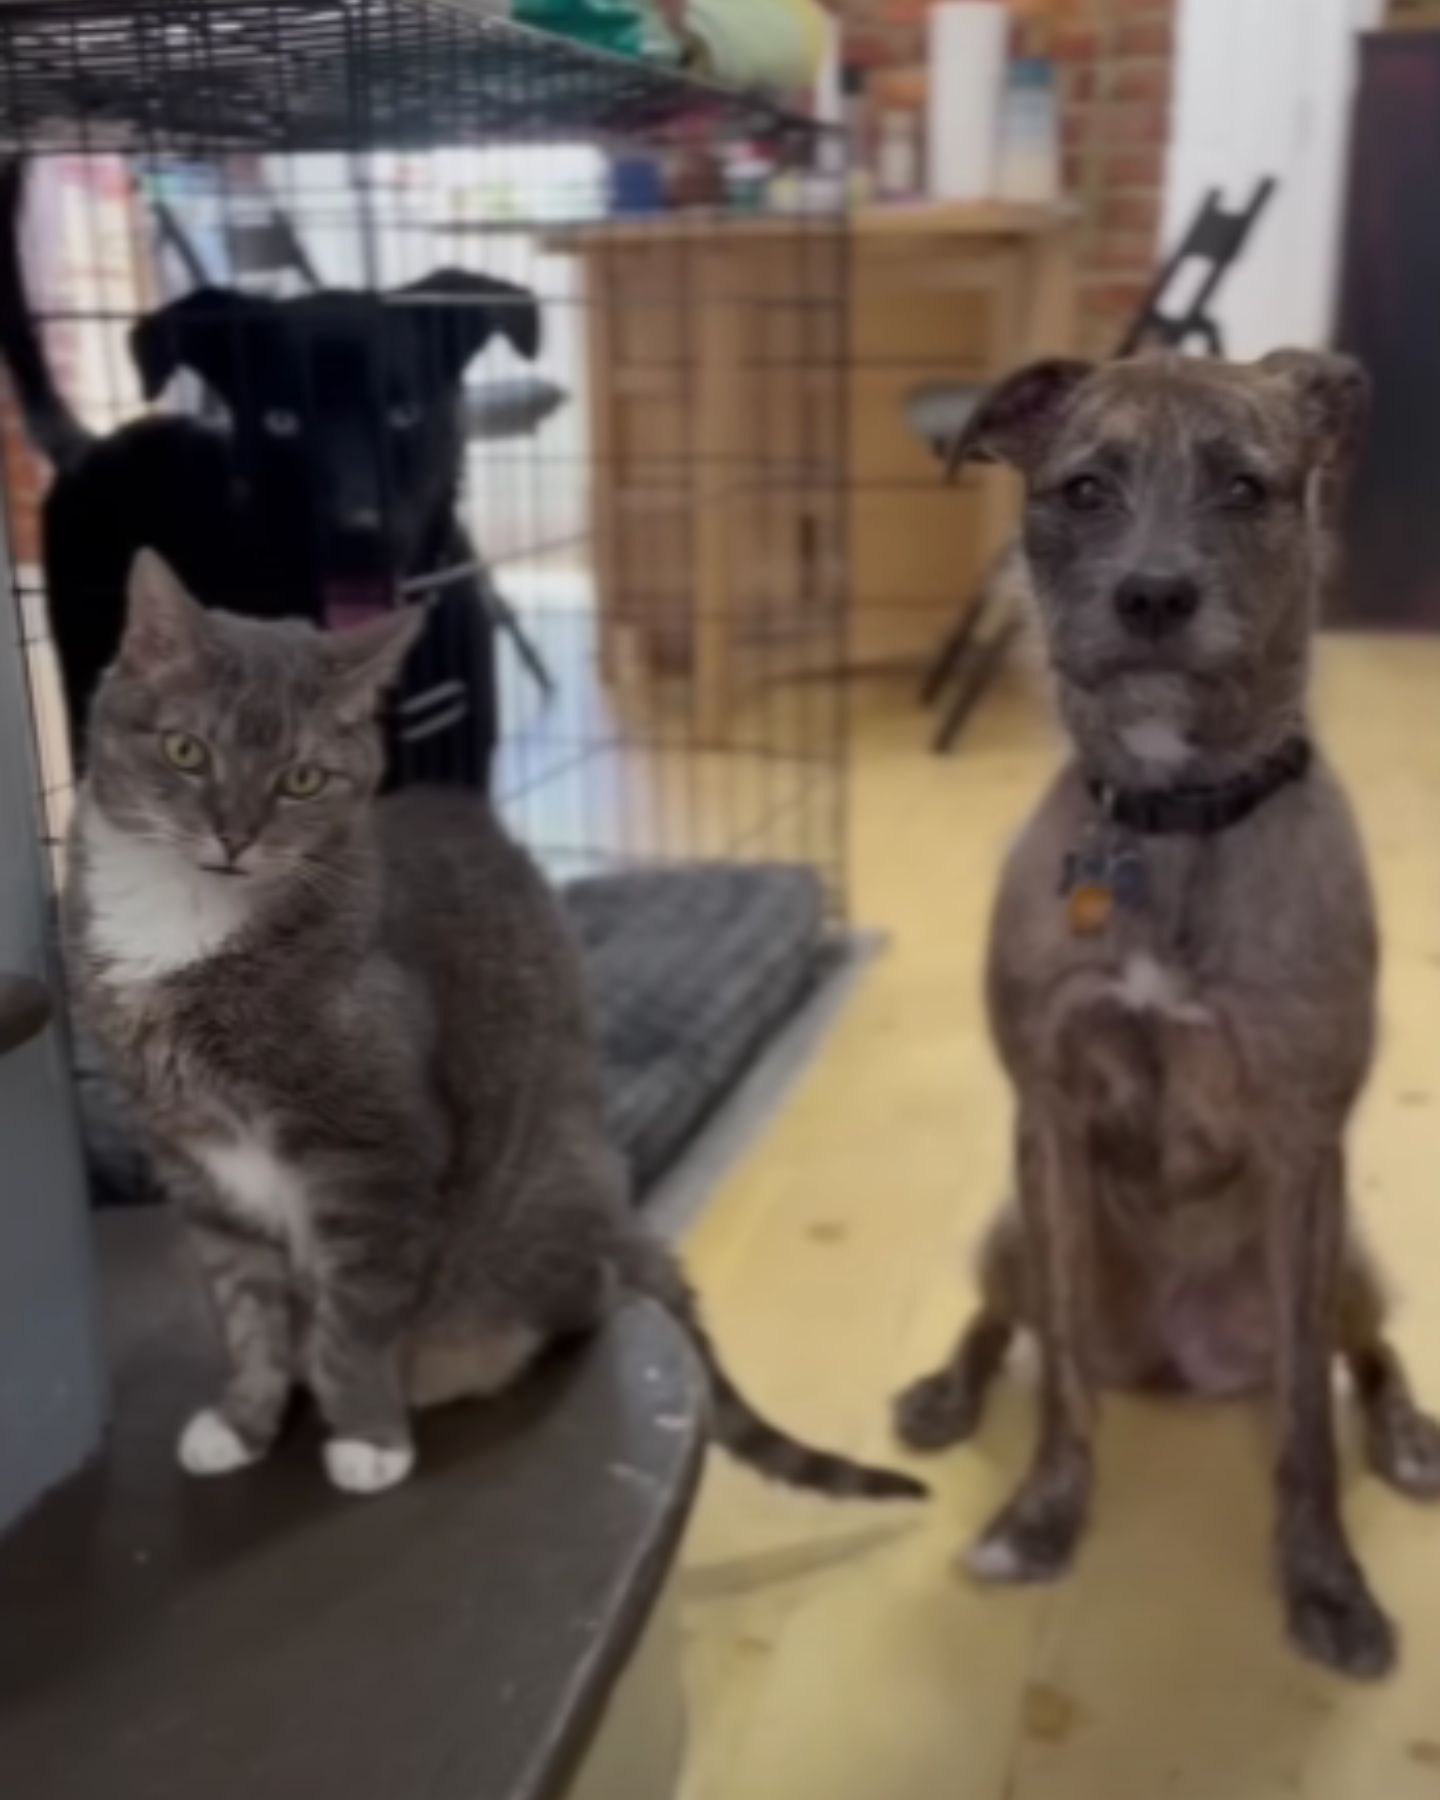 black dog, gray dog and cat